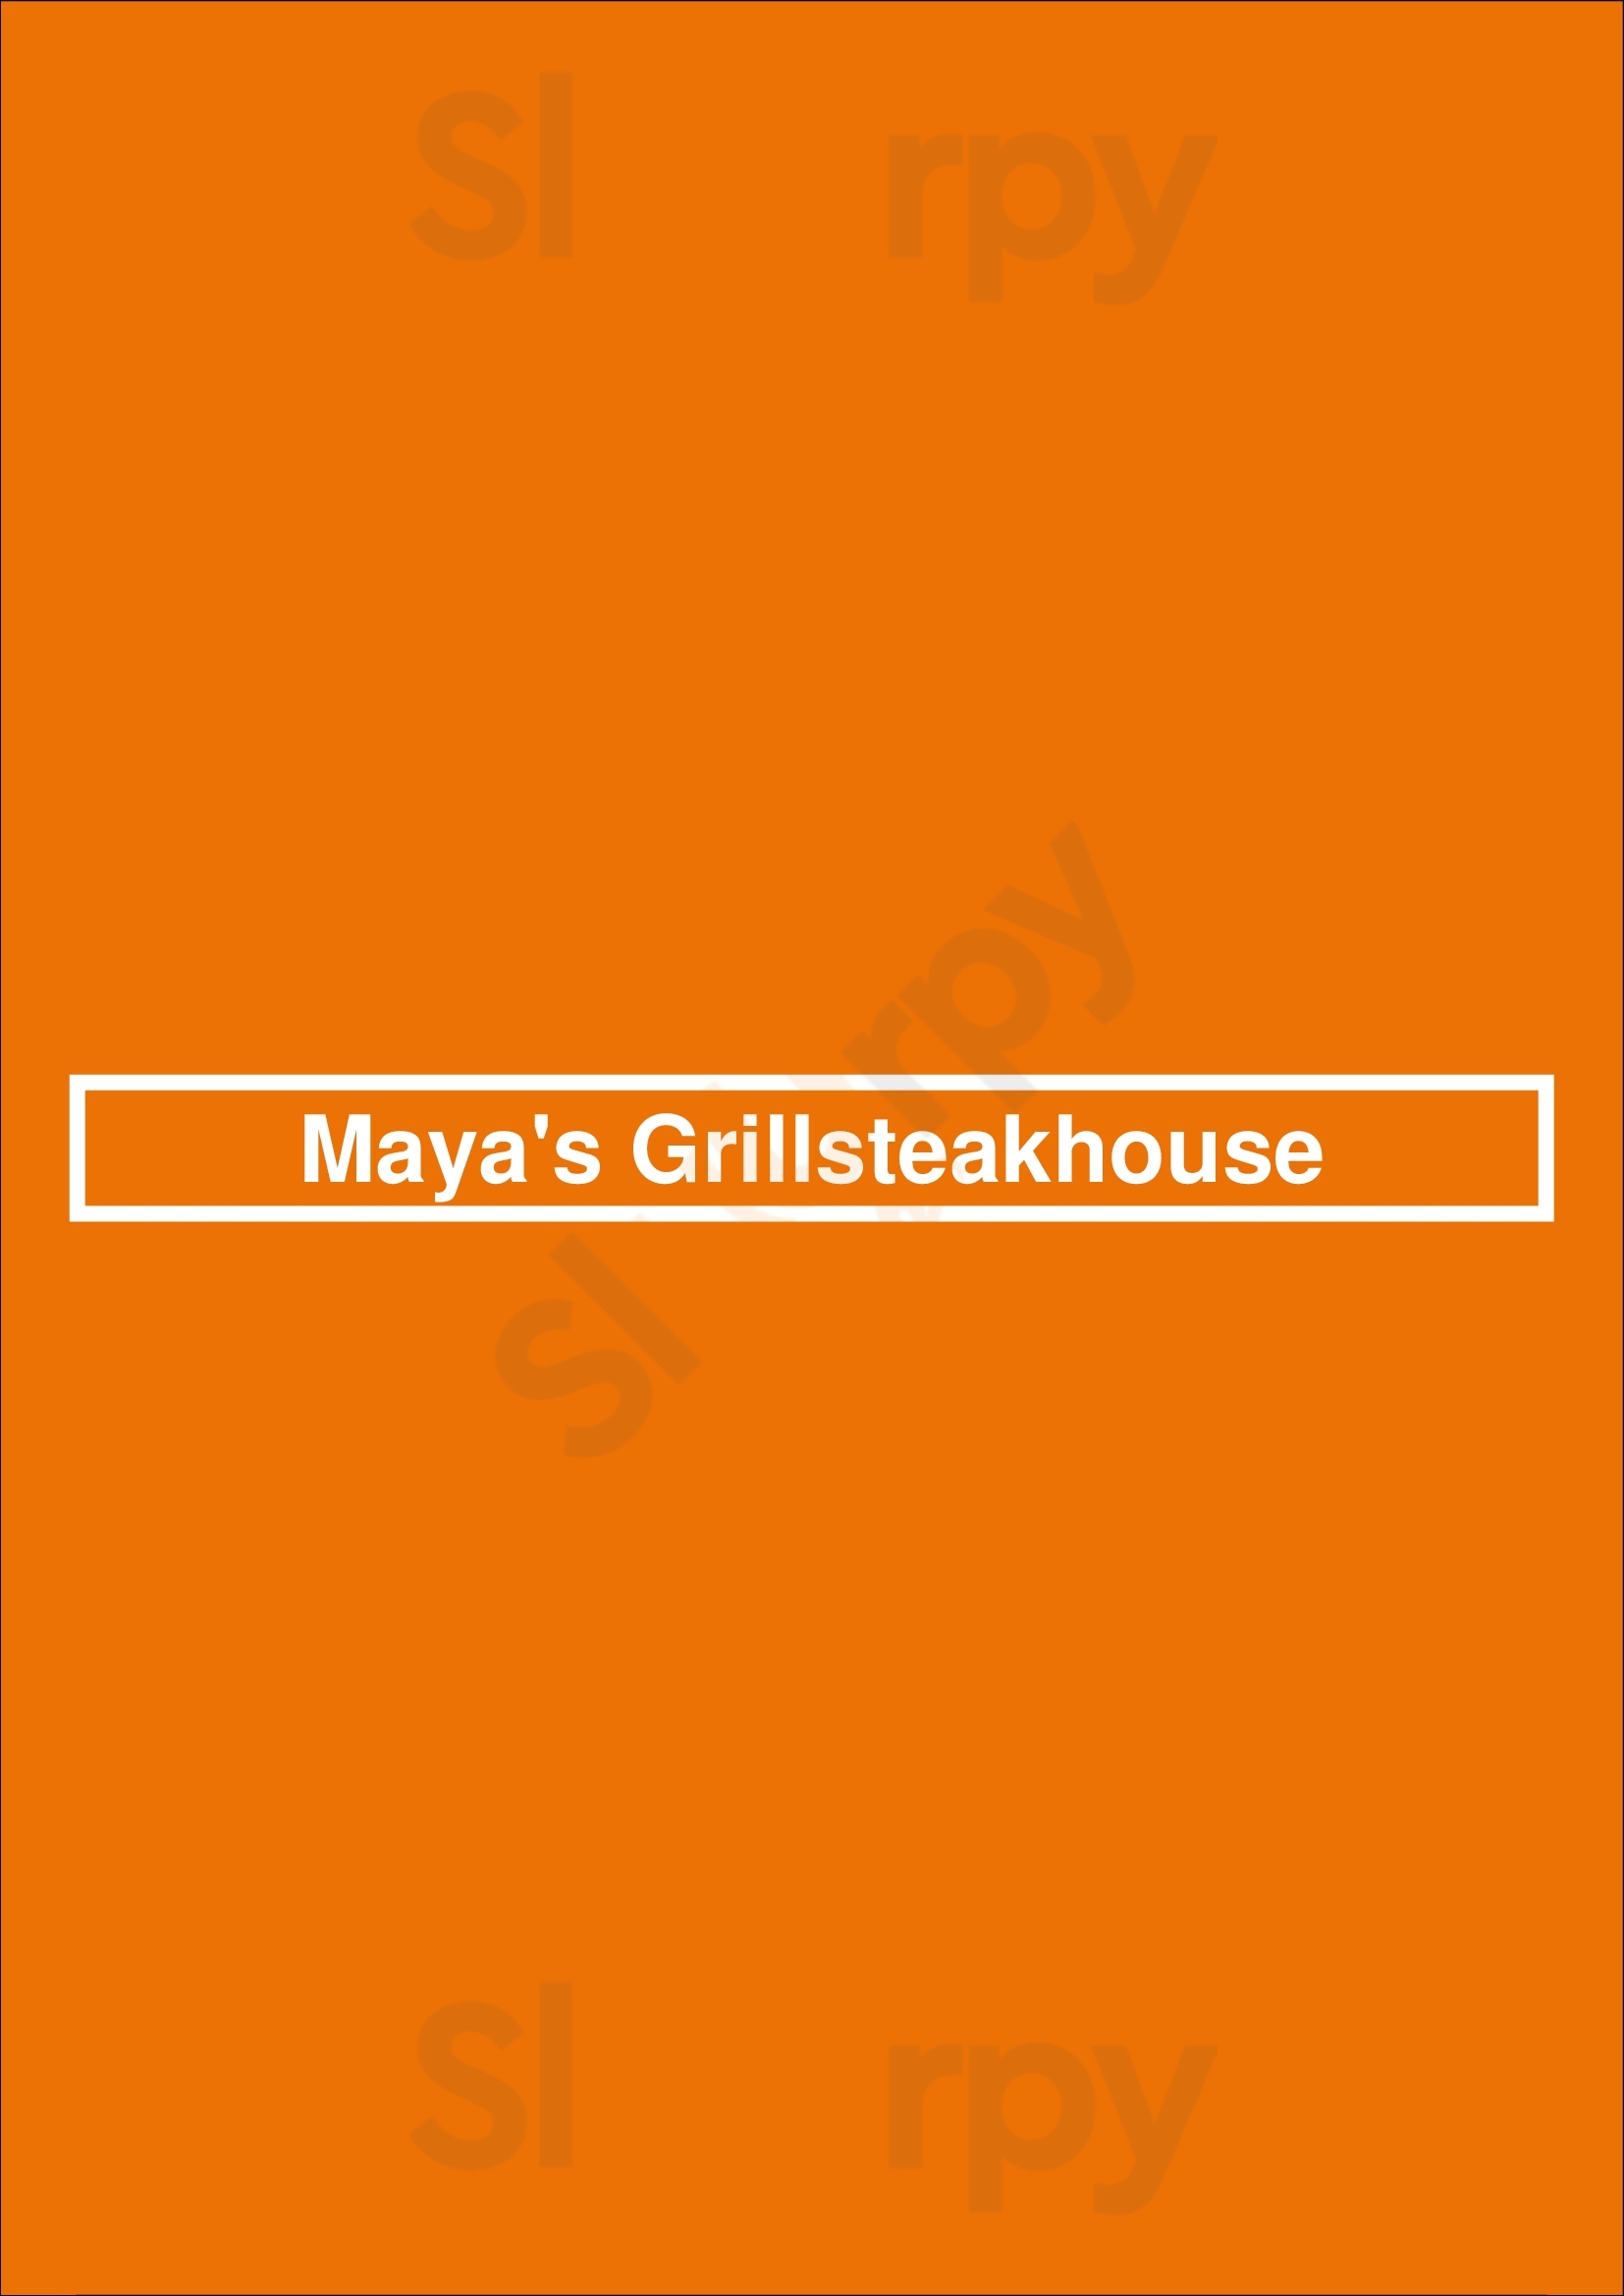 Maya's Grillsteakhouse Amsterdam Menu - 1